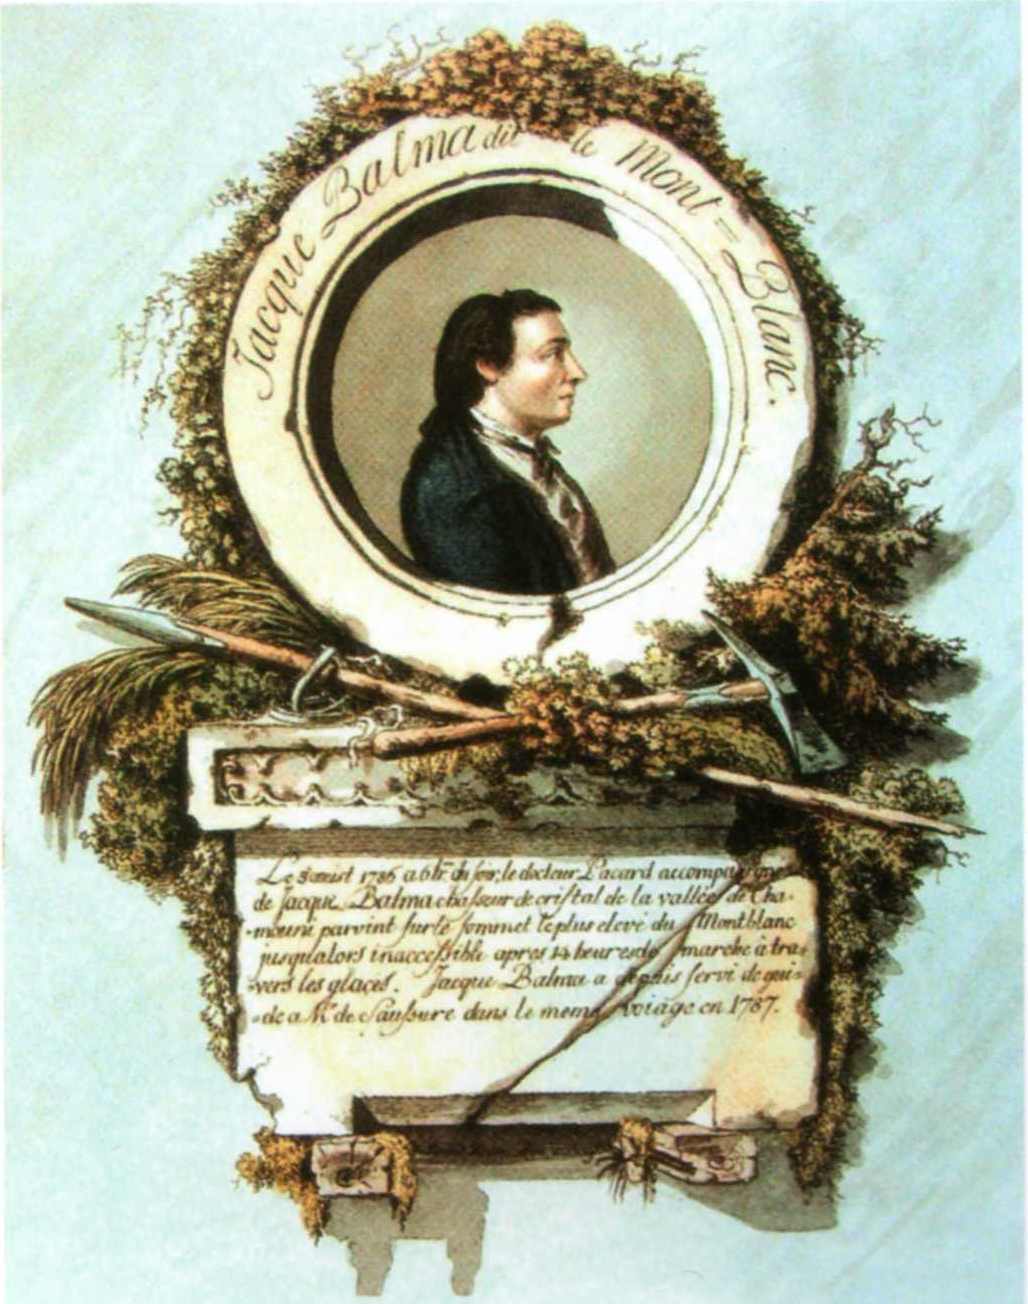  Жак Бальма (Jacques Balmat). Портрет на медальоне работы Bacler d